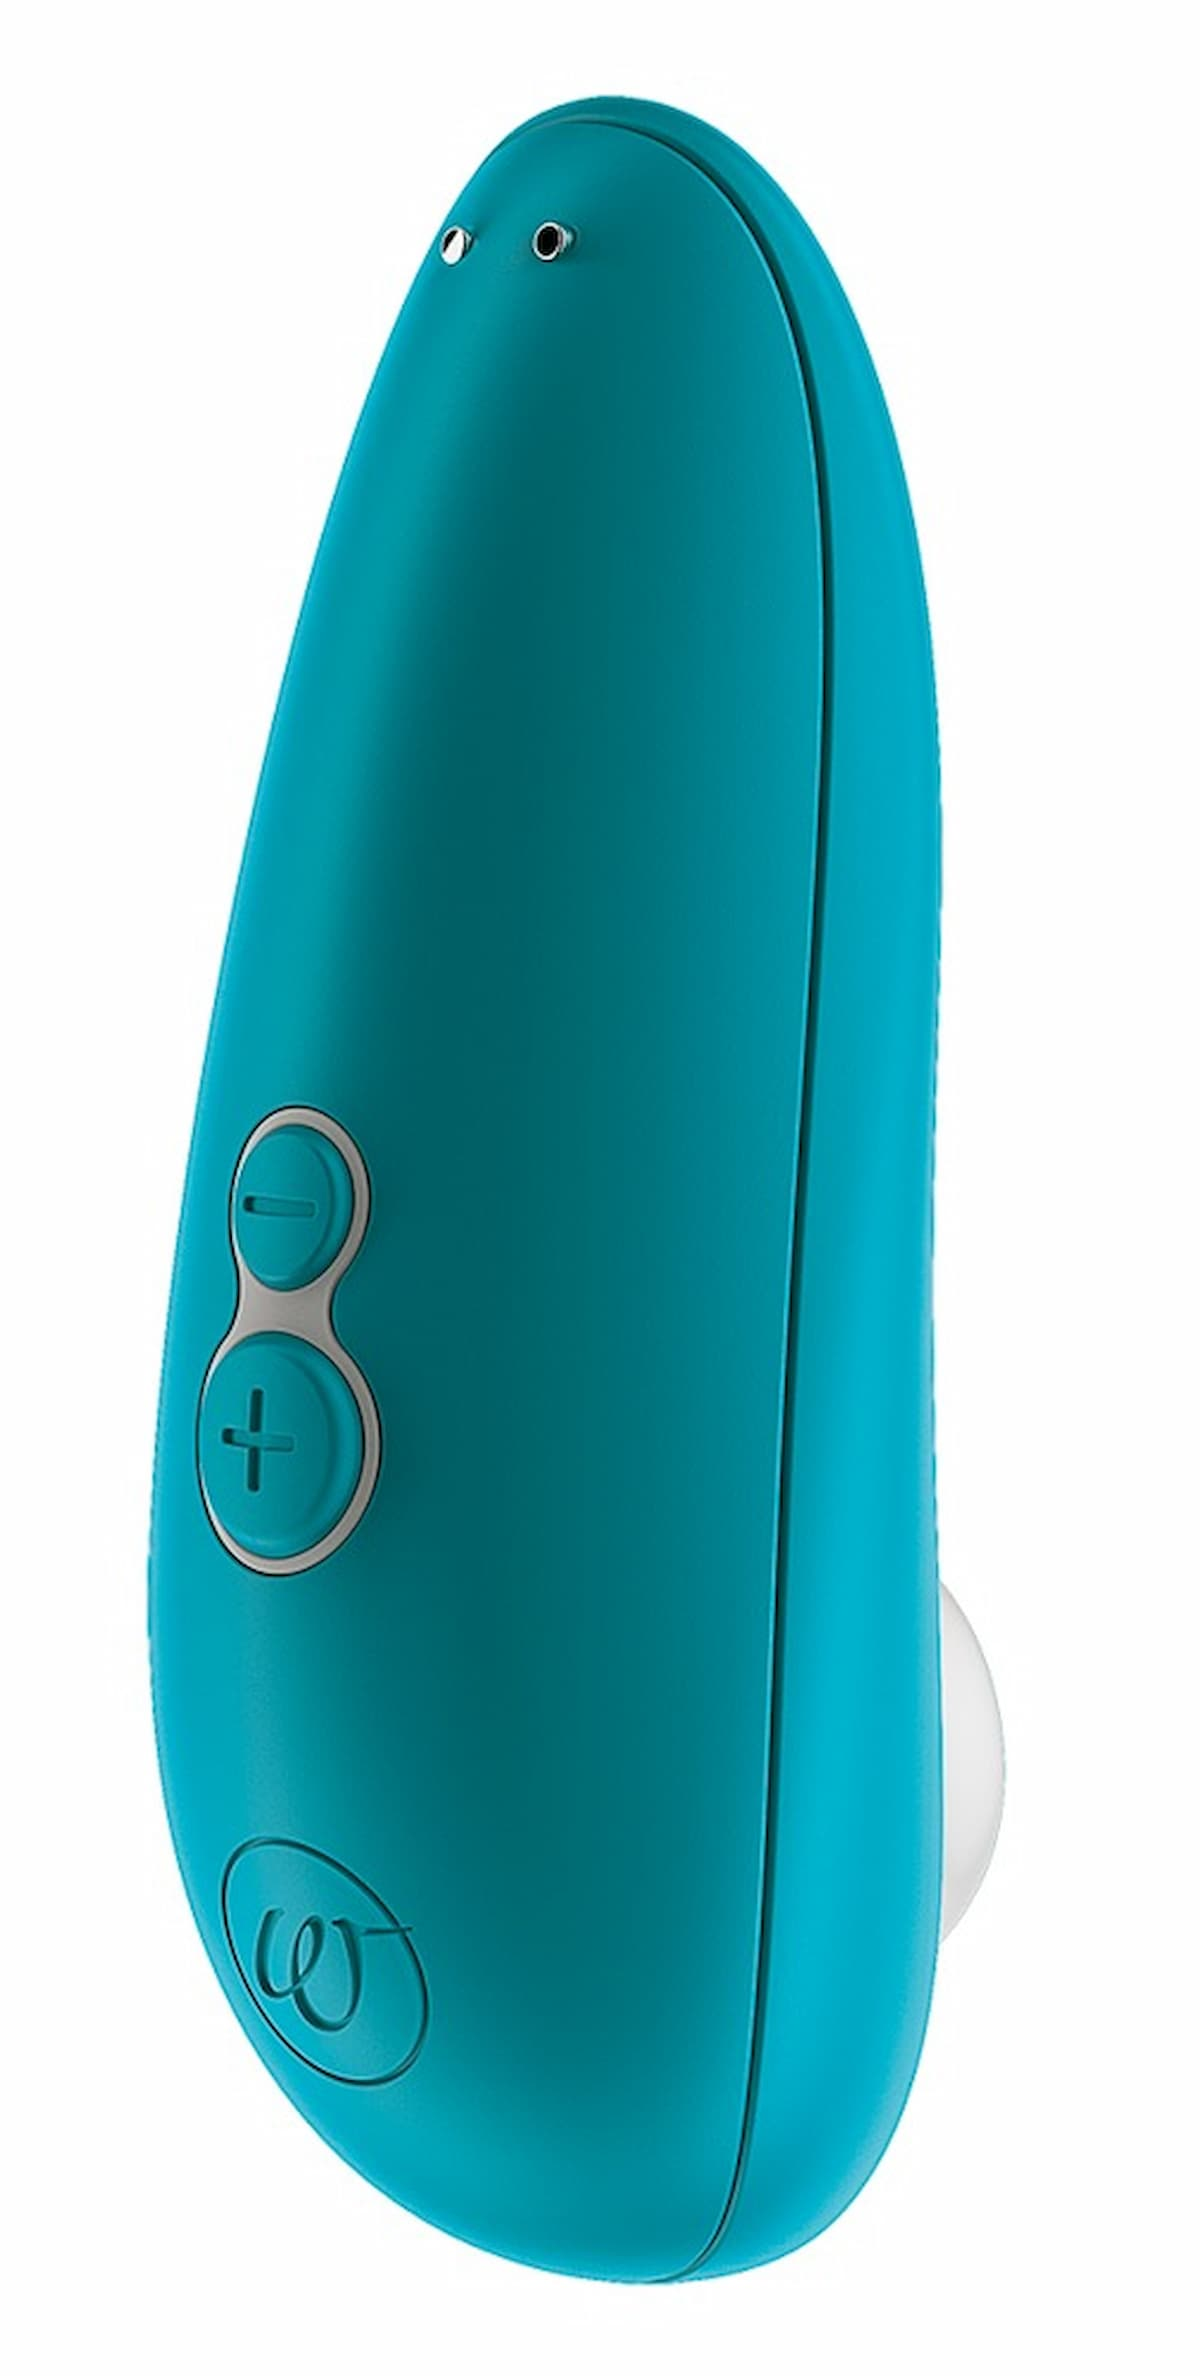 Starlet Turquoise Vibrator WOMANIZER 3